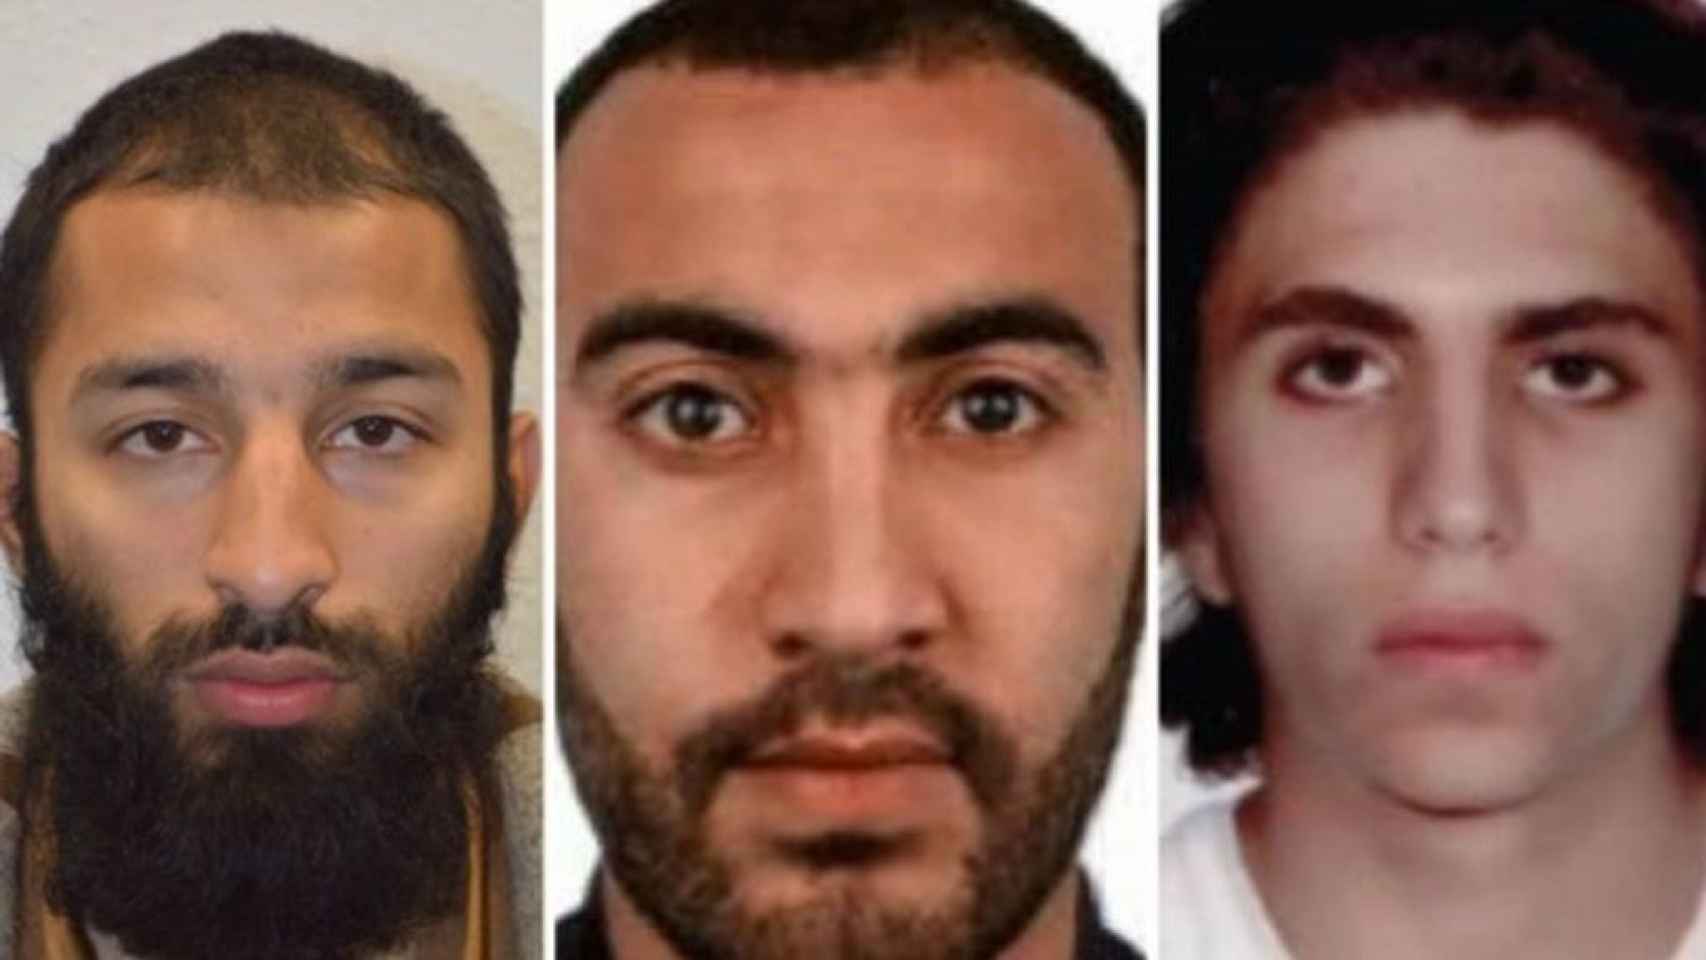 Shazad Butt, Rachid Redouane y Youssef Zaghbam, autores del atentado en Londres.